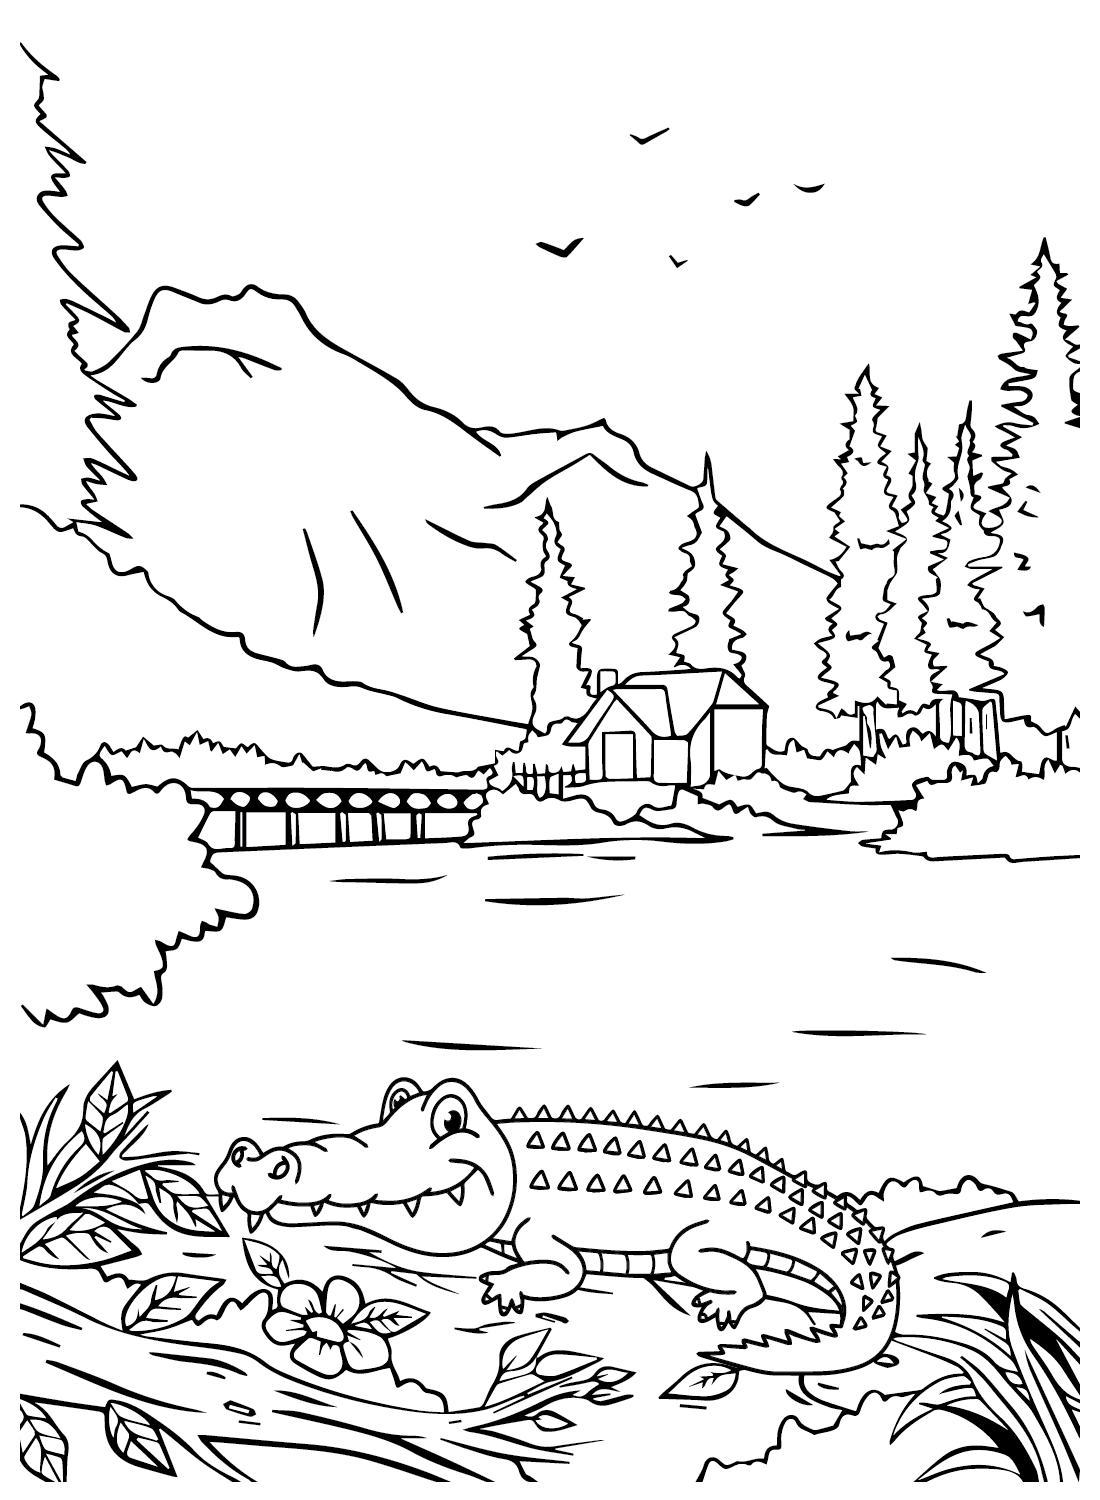 Coloring Page Crocodile